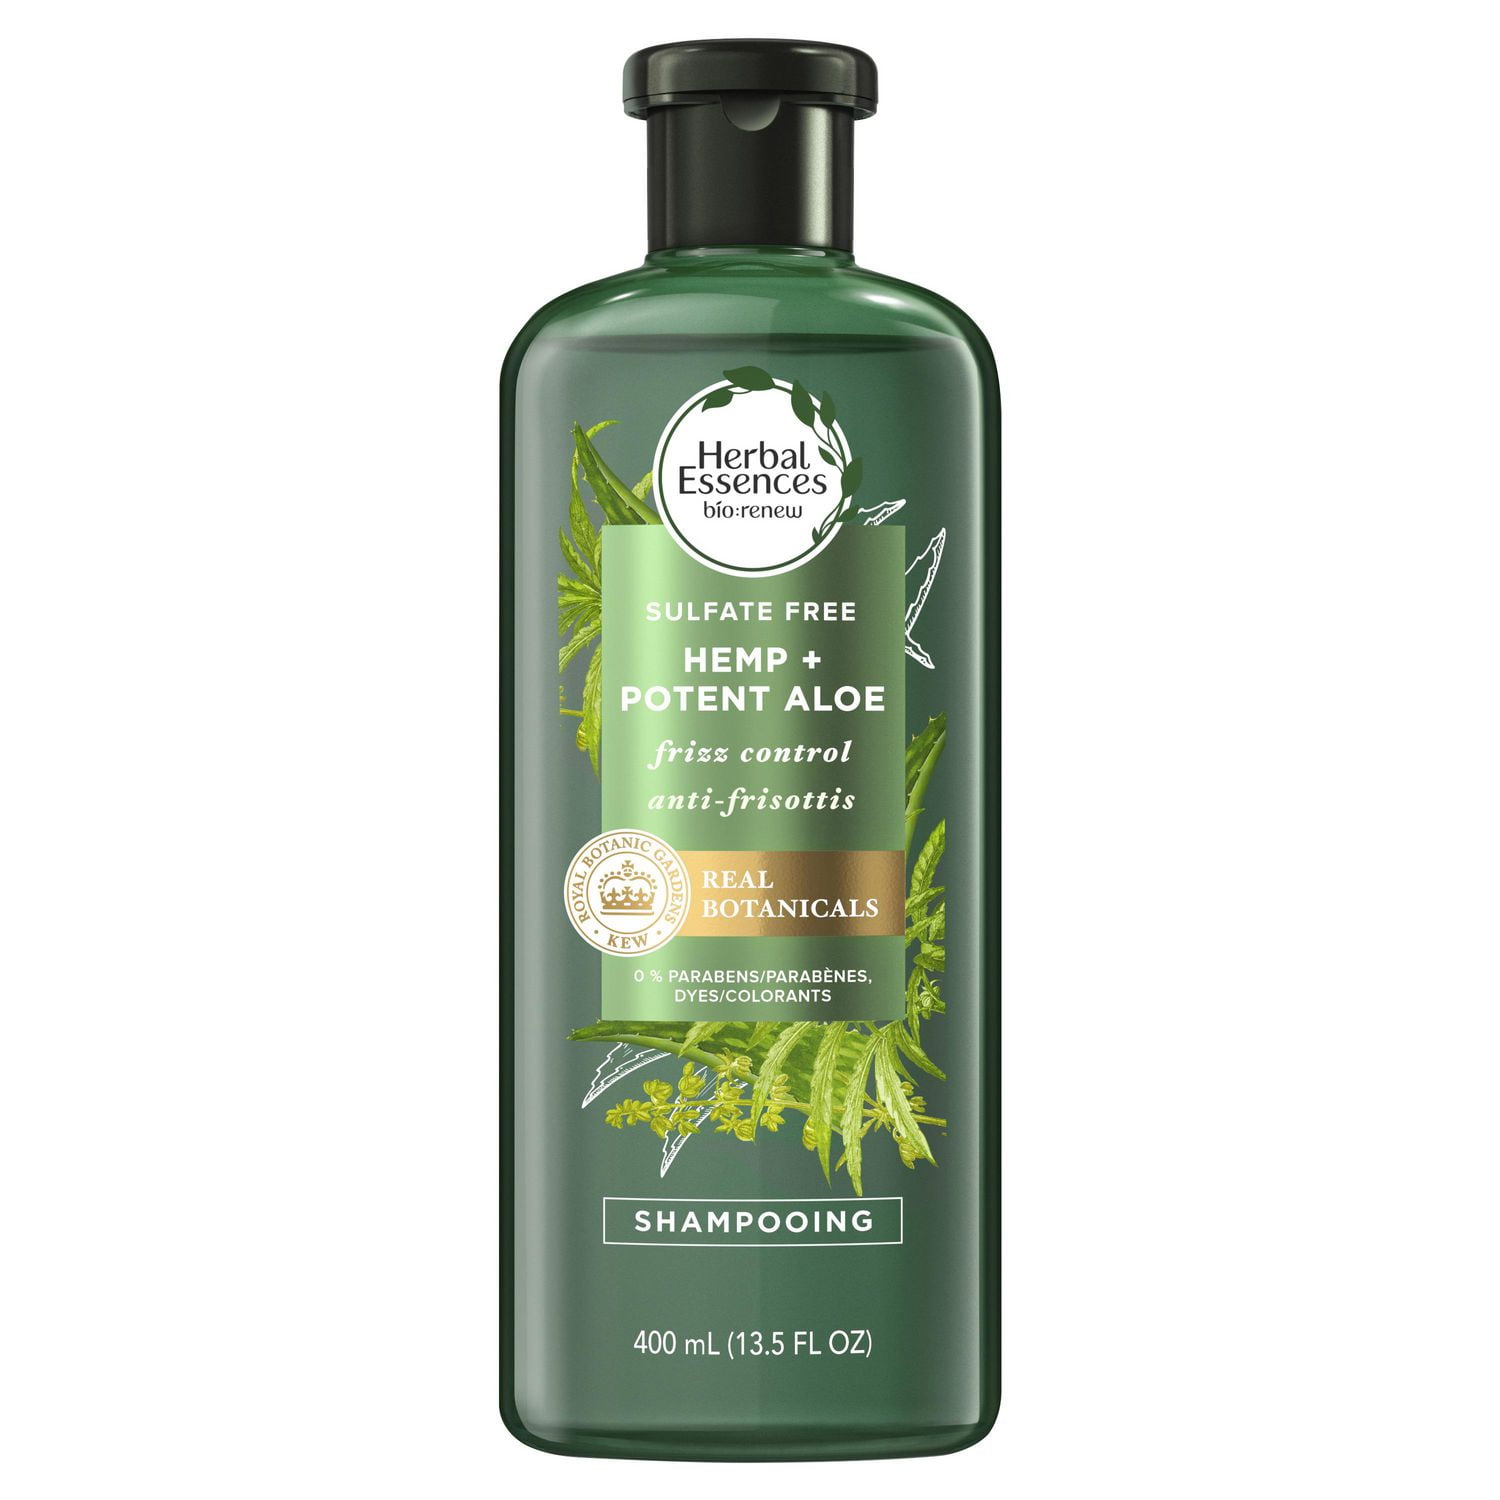 Herbal Essences bio:renew Hemp + Potent Aloe Sulfate Free Shampoo Frizz  Control 